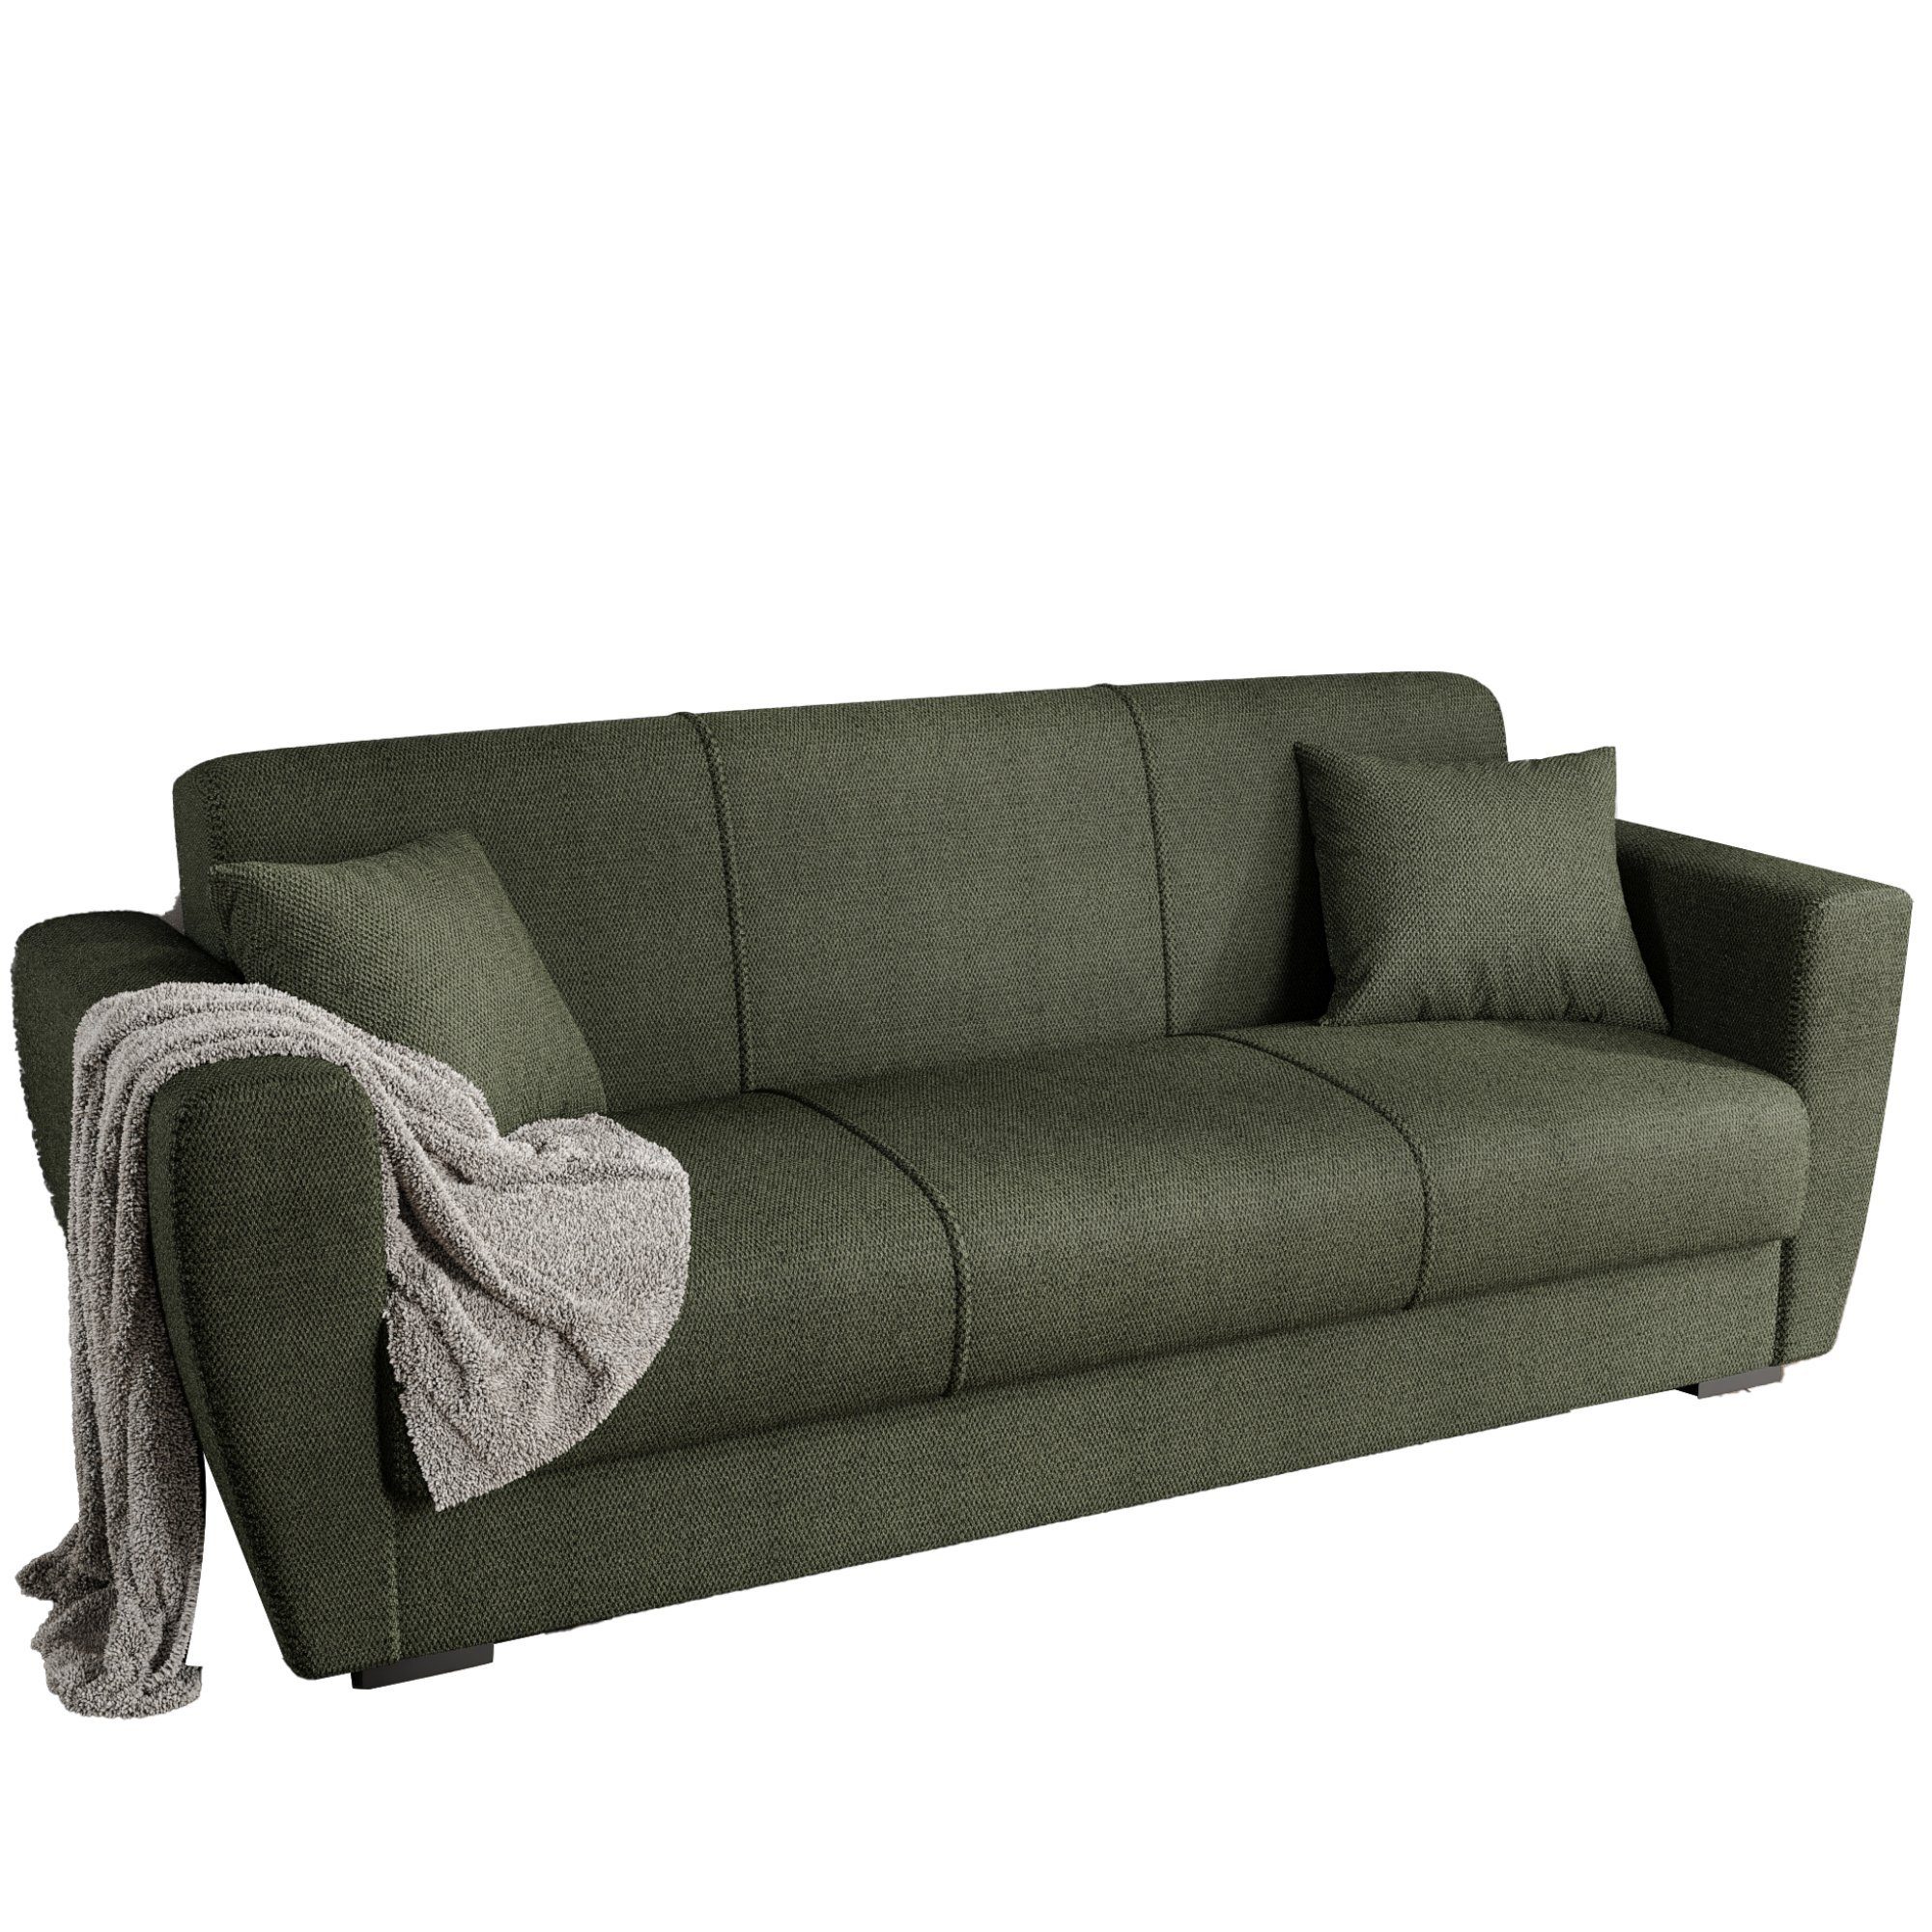 Gozos Sofa Gozos cm 3 x Bettfunktion Grün Palamos Sitzer, Series 221 x 85 86 Leinenoptikstoff, Couch